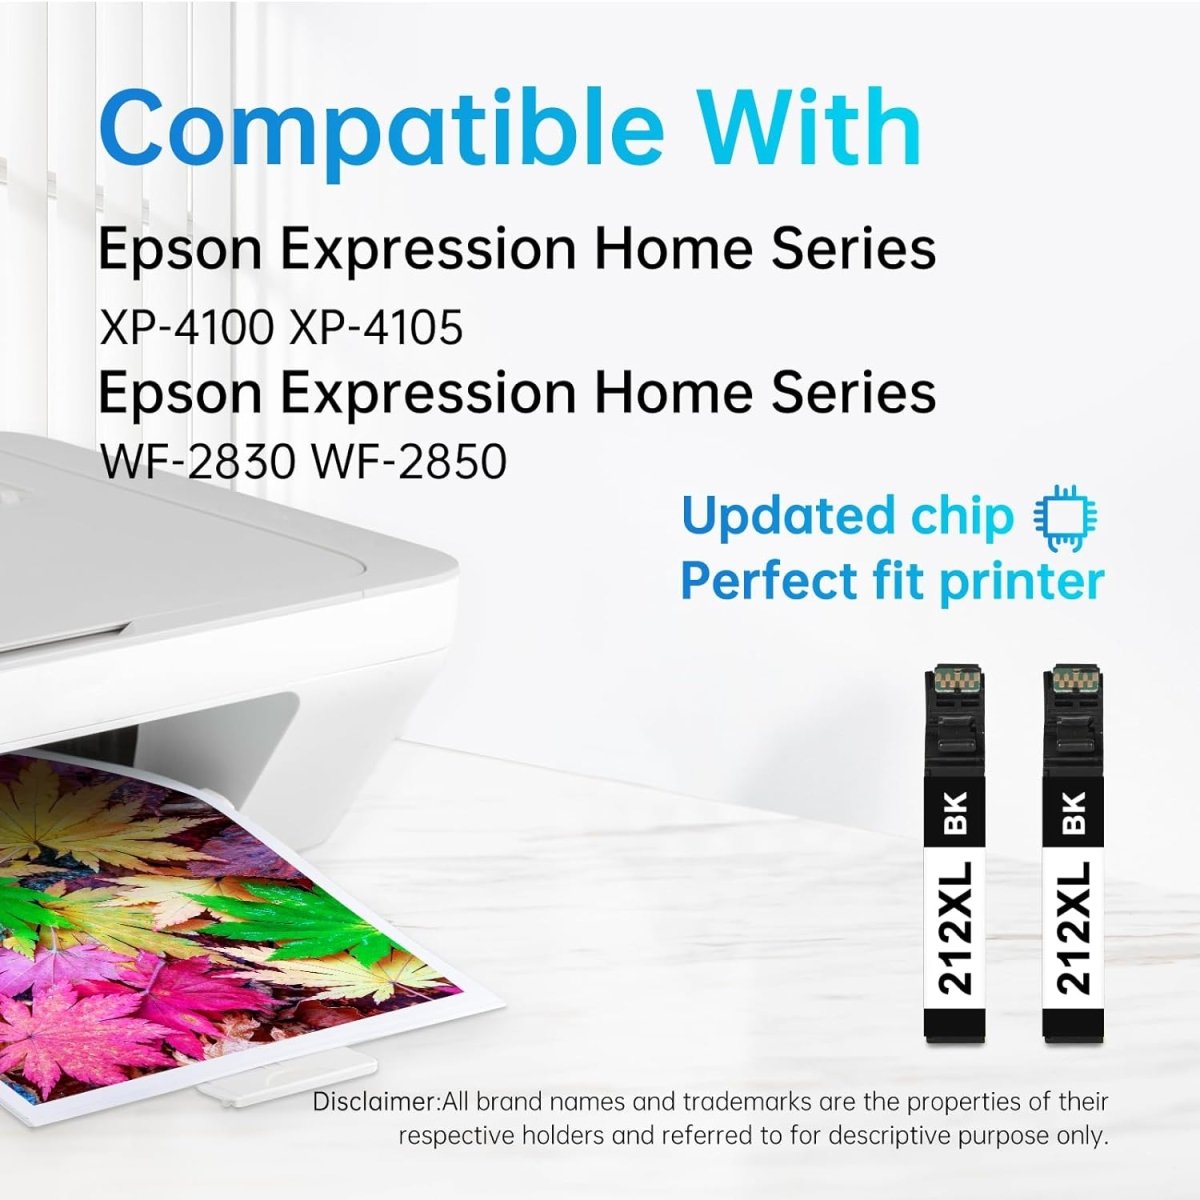 Remanufactured Epson 212 Black Ink Cartridges XL 2-Pack - High Capacity - Linford Office:Printer Ink & Toner Cartridge